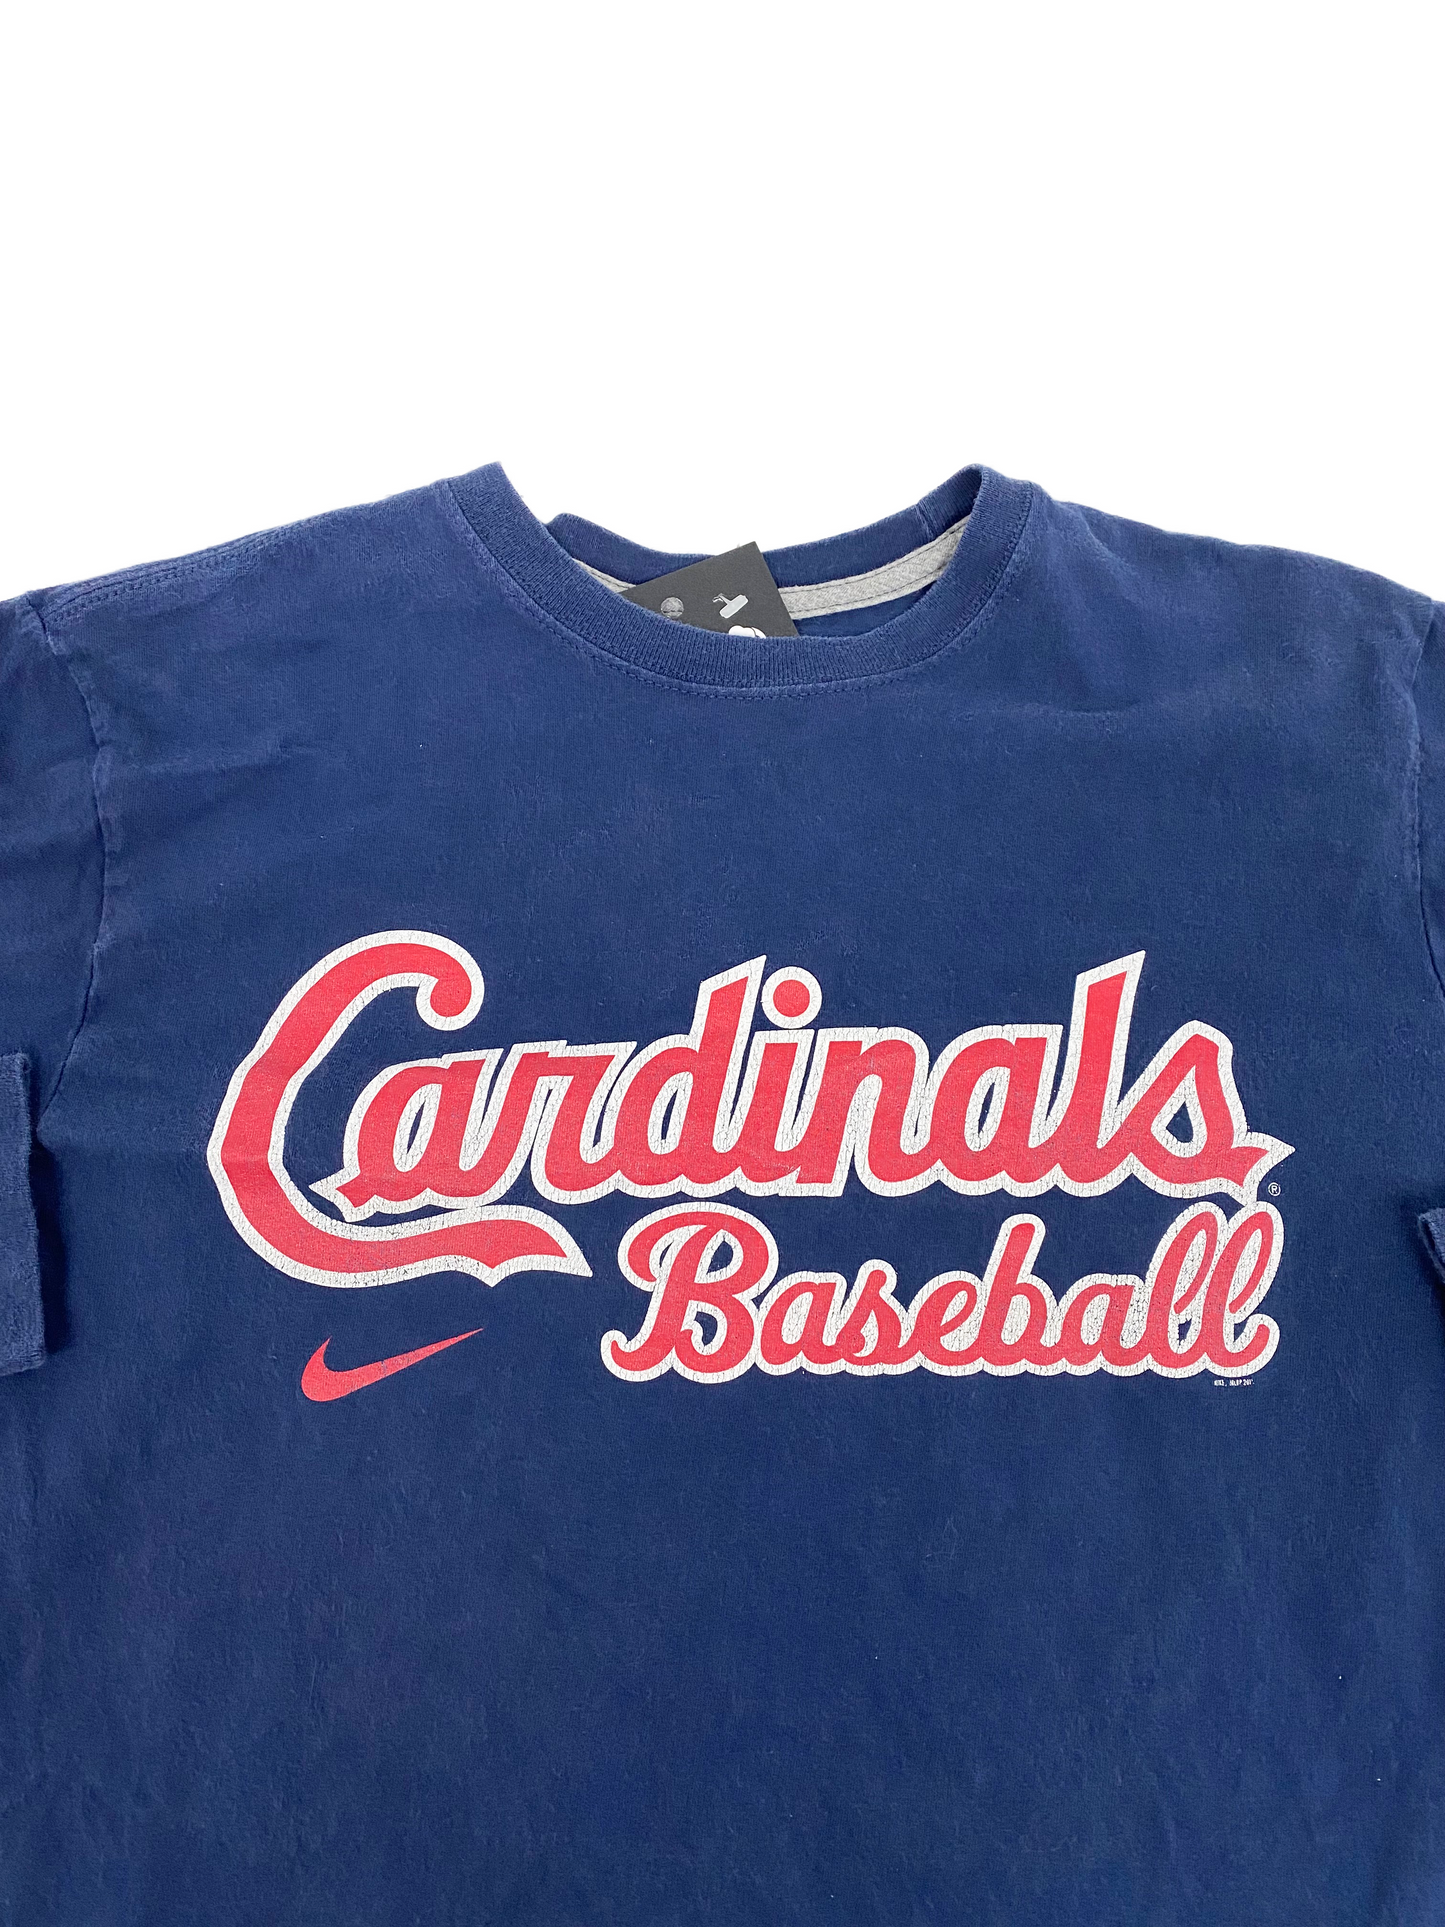 Cardinals Baseball T-Shirt